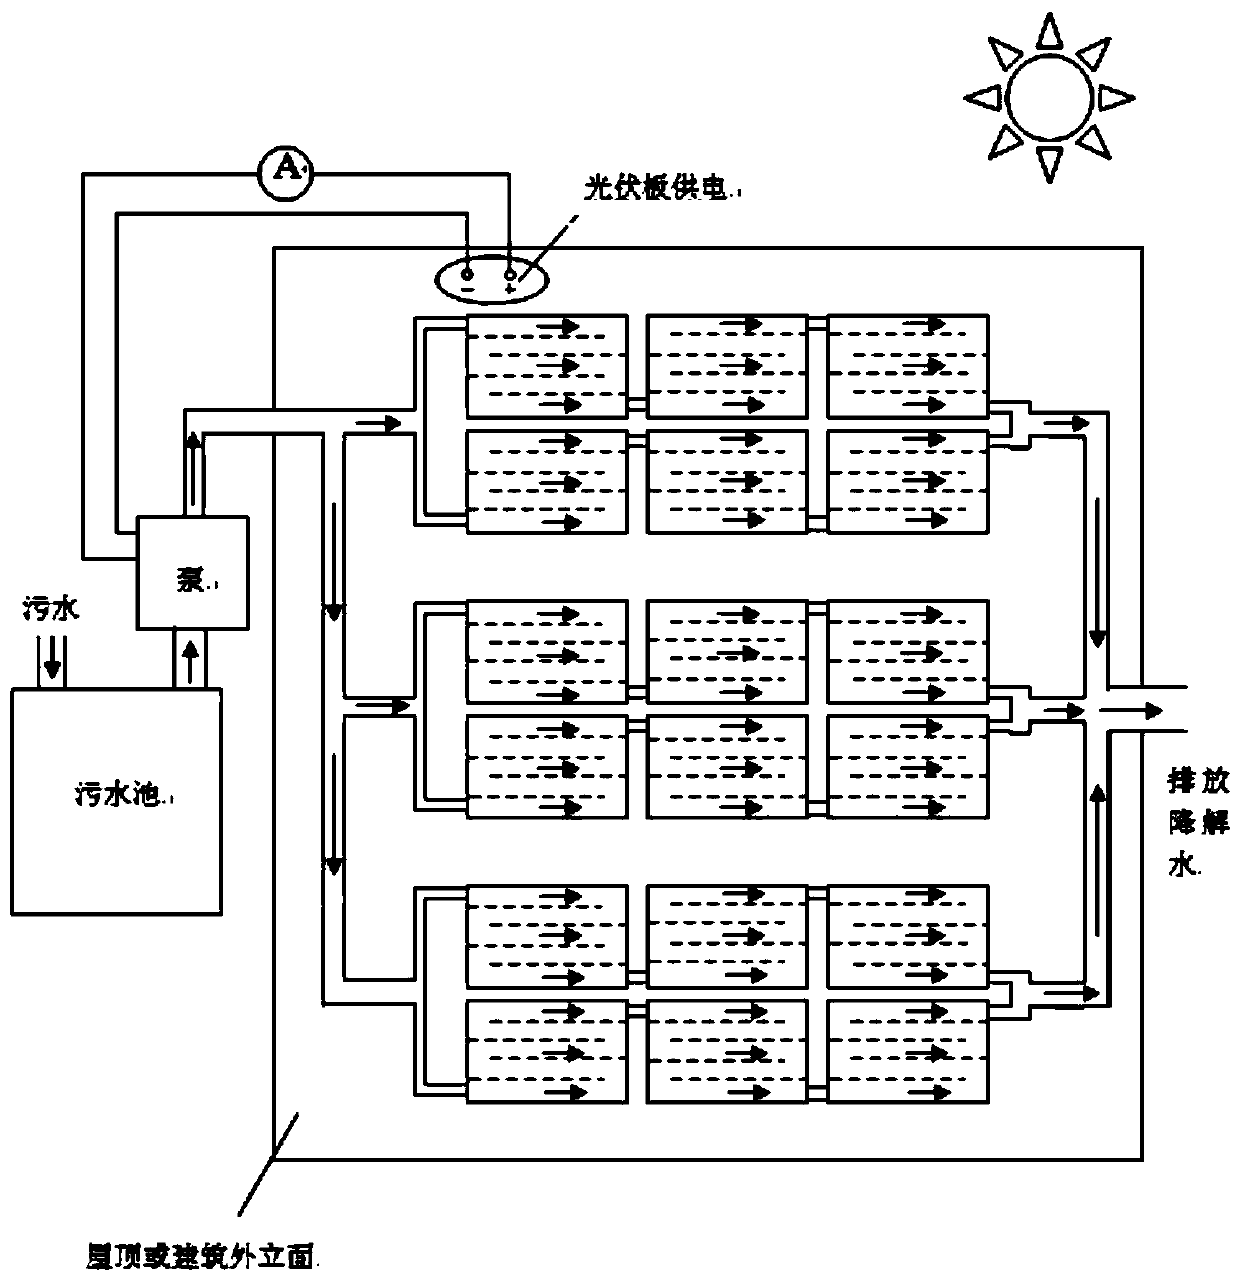 Solar energy degradation-generation integrated modular device